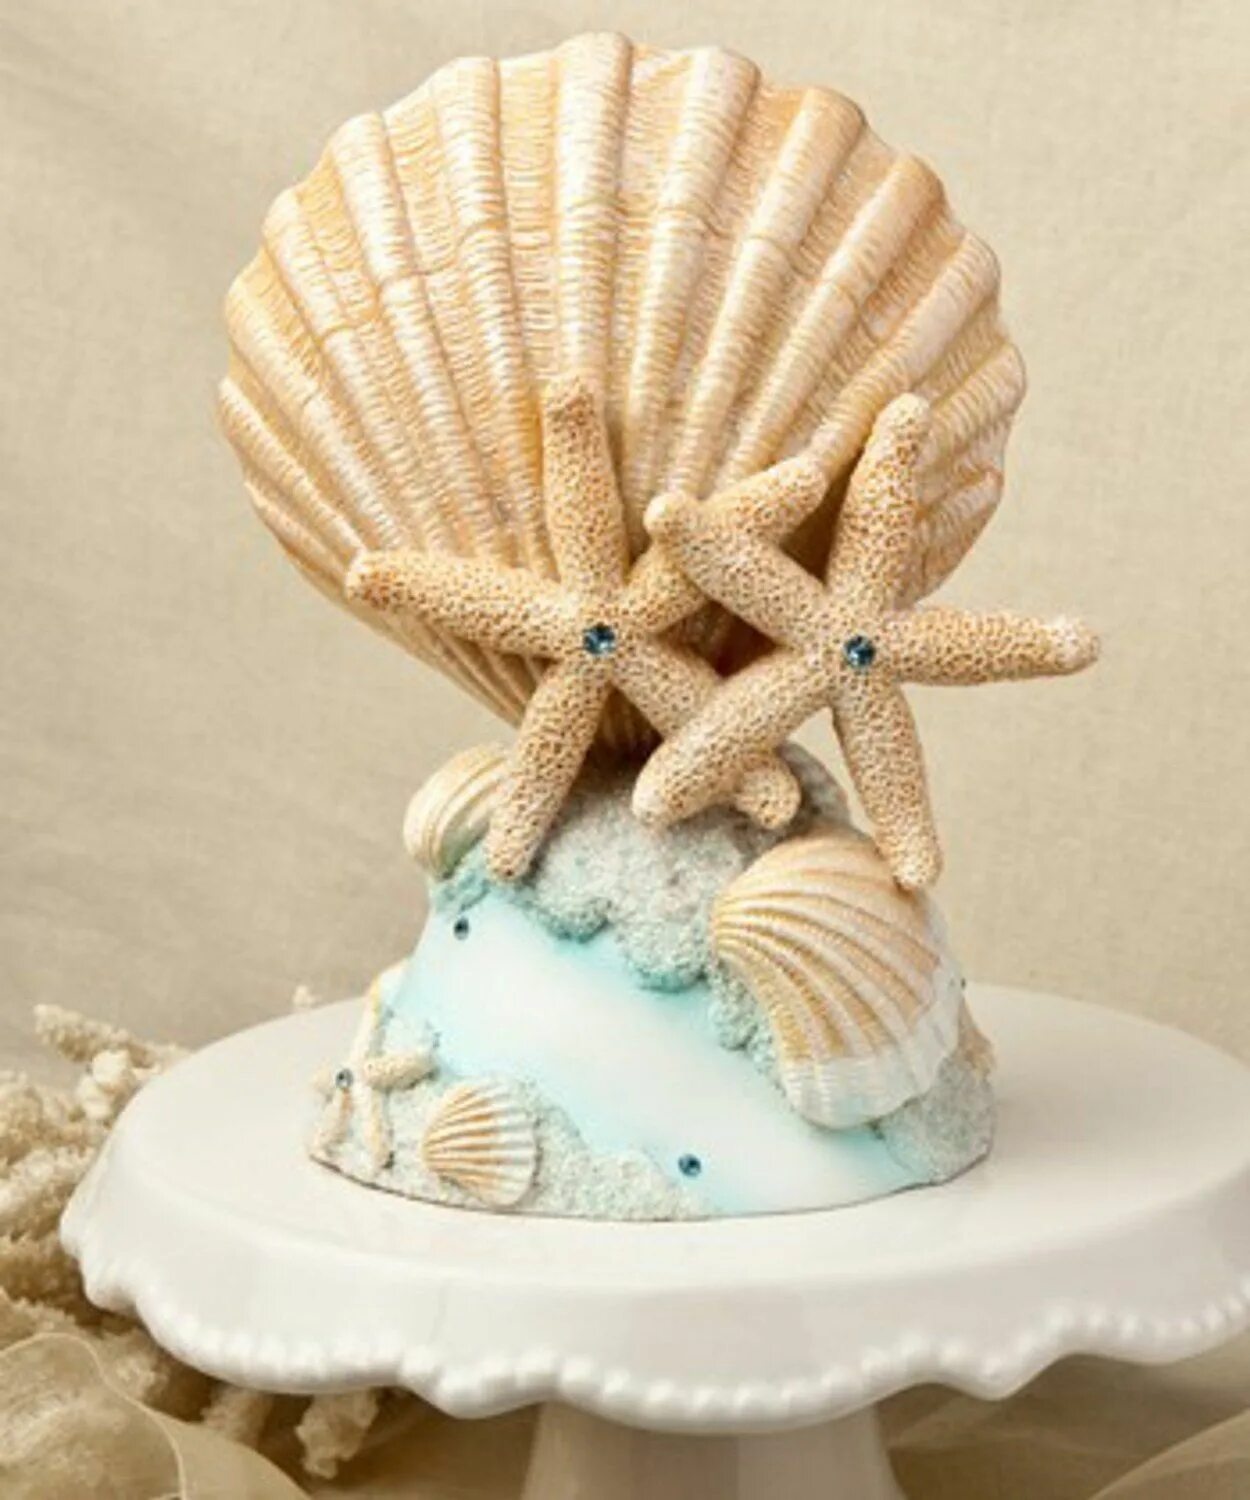 Пирожные в морской тематике. Торт морская тематика. Торт с ракушками. Торт в морском стиле.